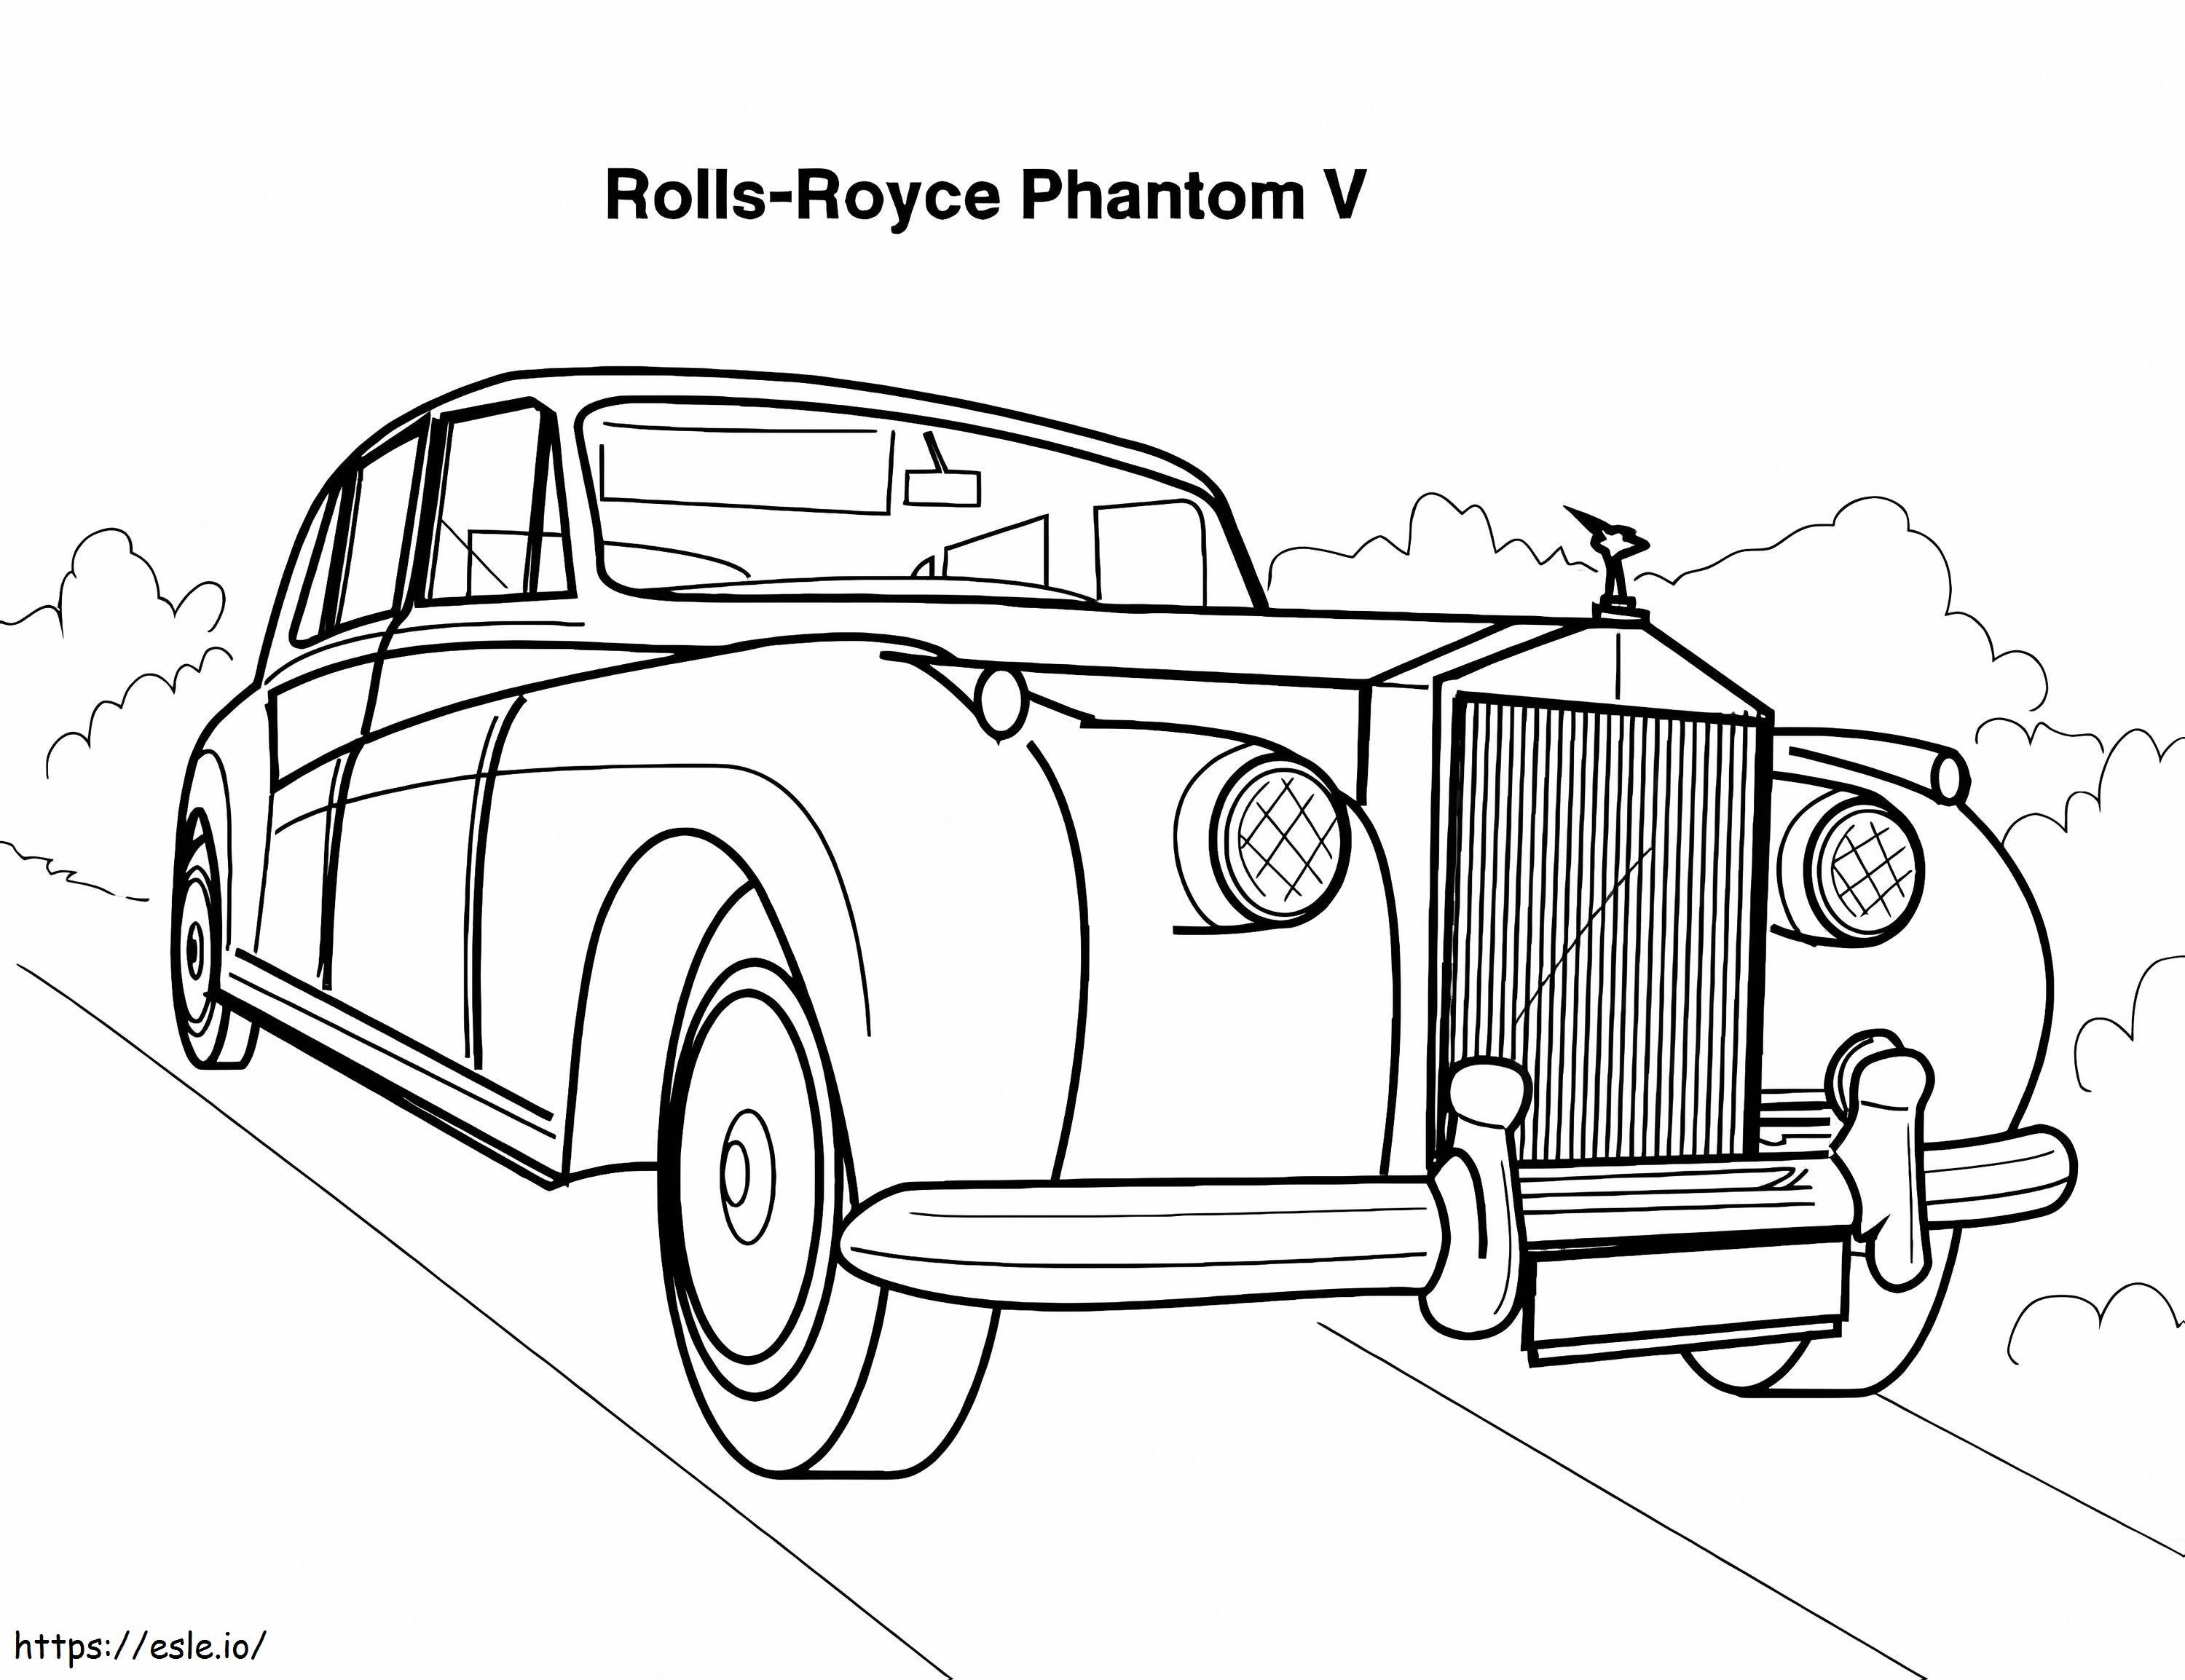 Rolls Royce Phantom V coloring page